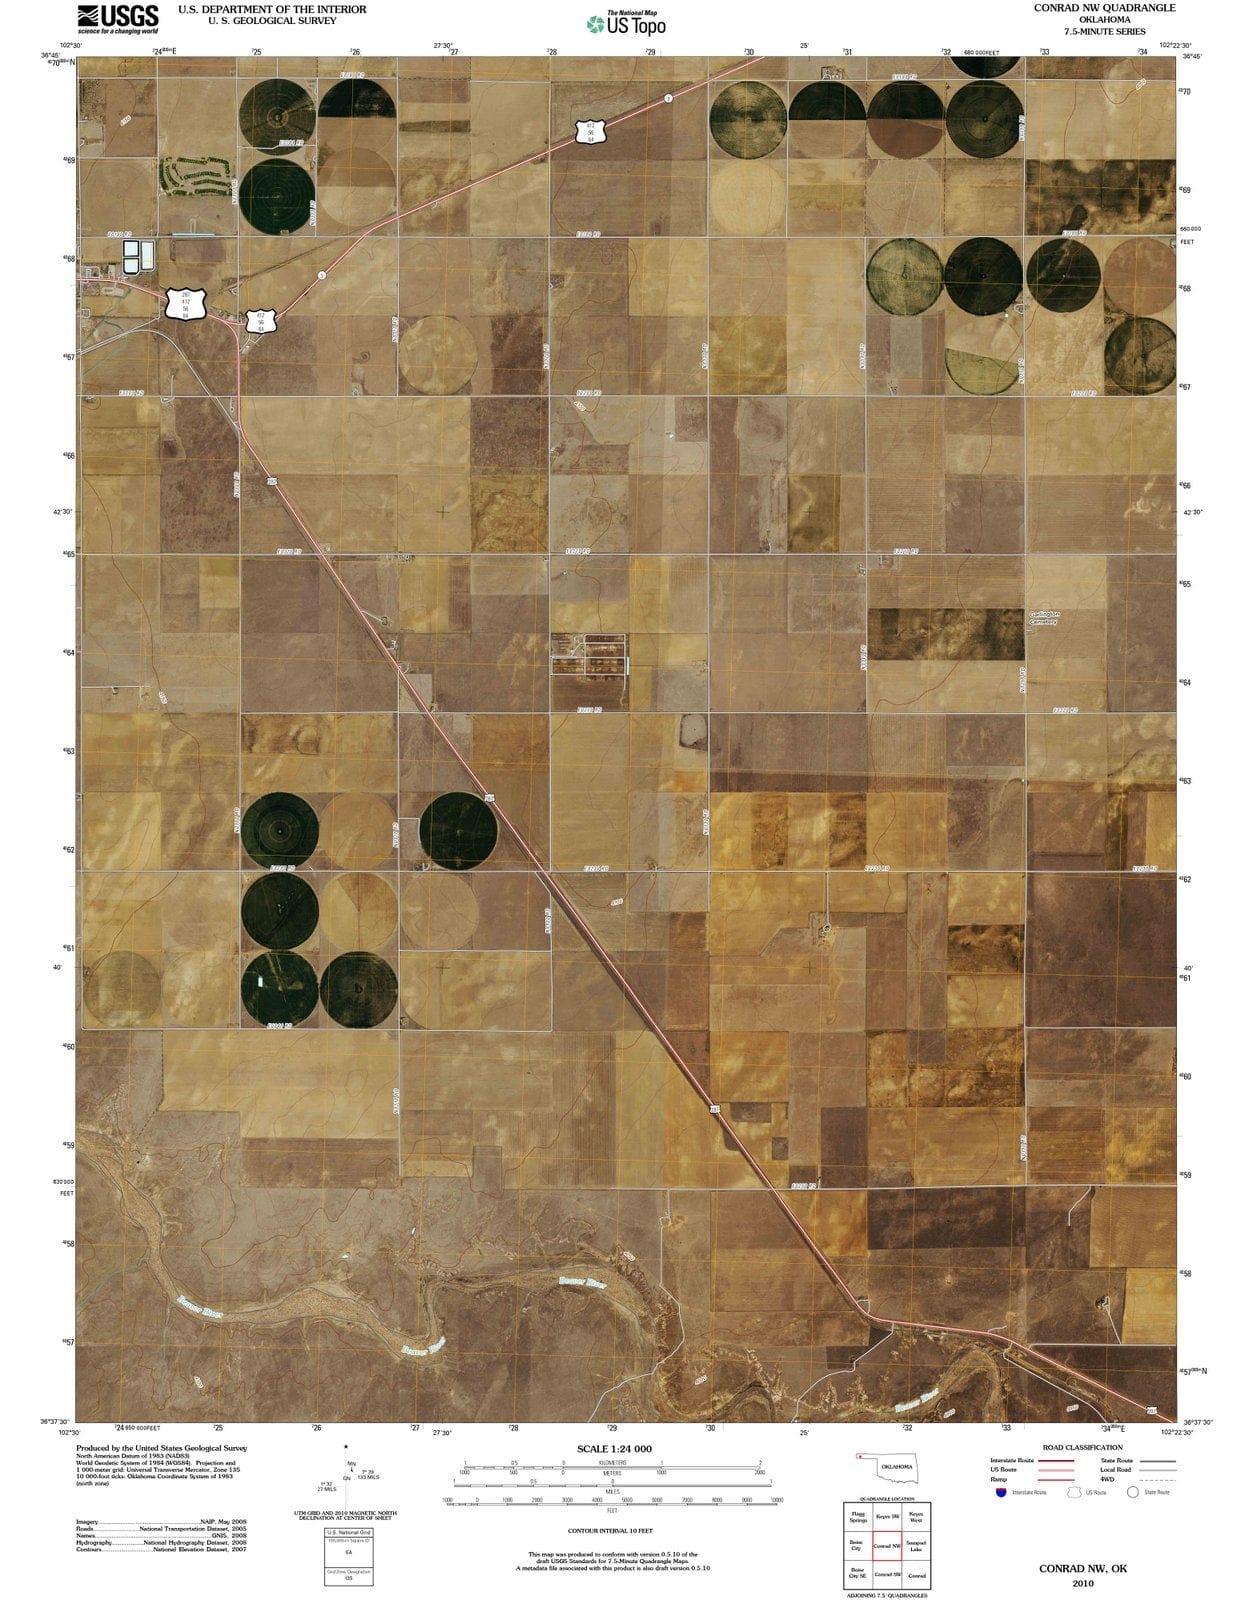 2010 Conrad, OK - Oklahoma - USGS Topographic Map